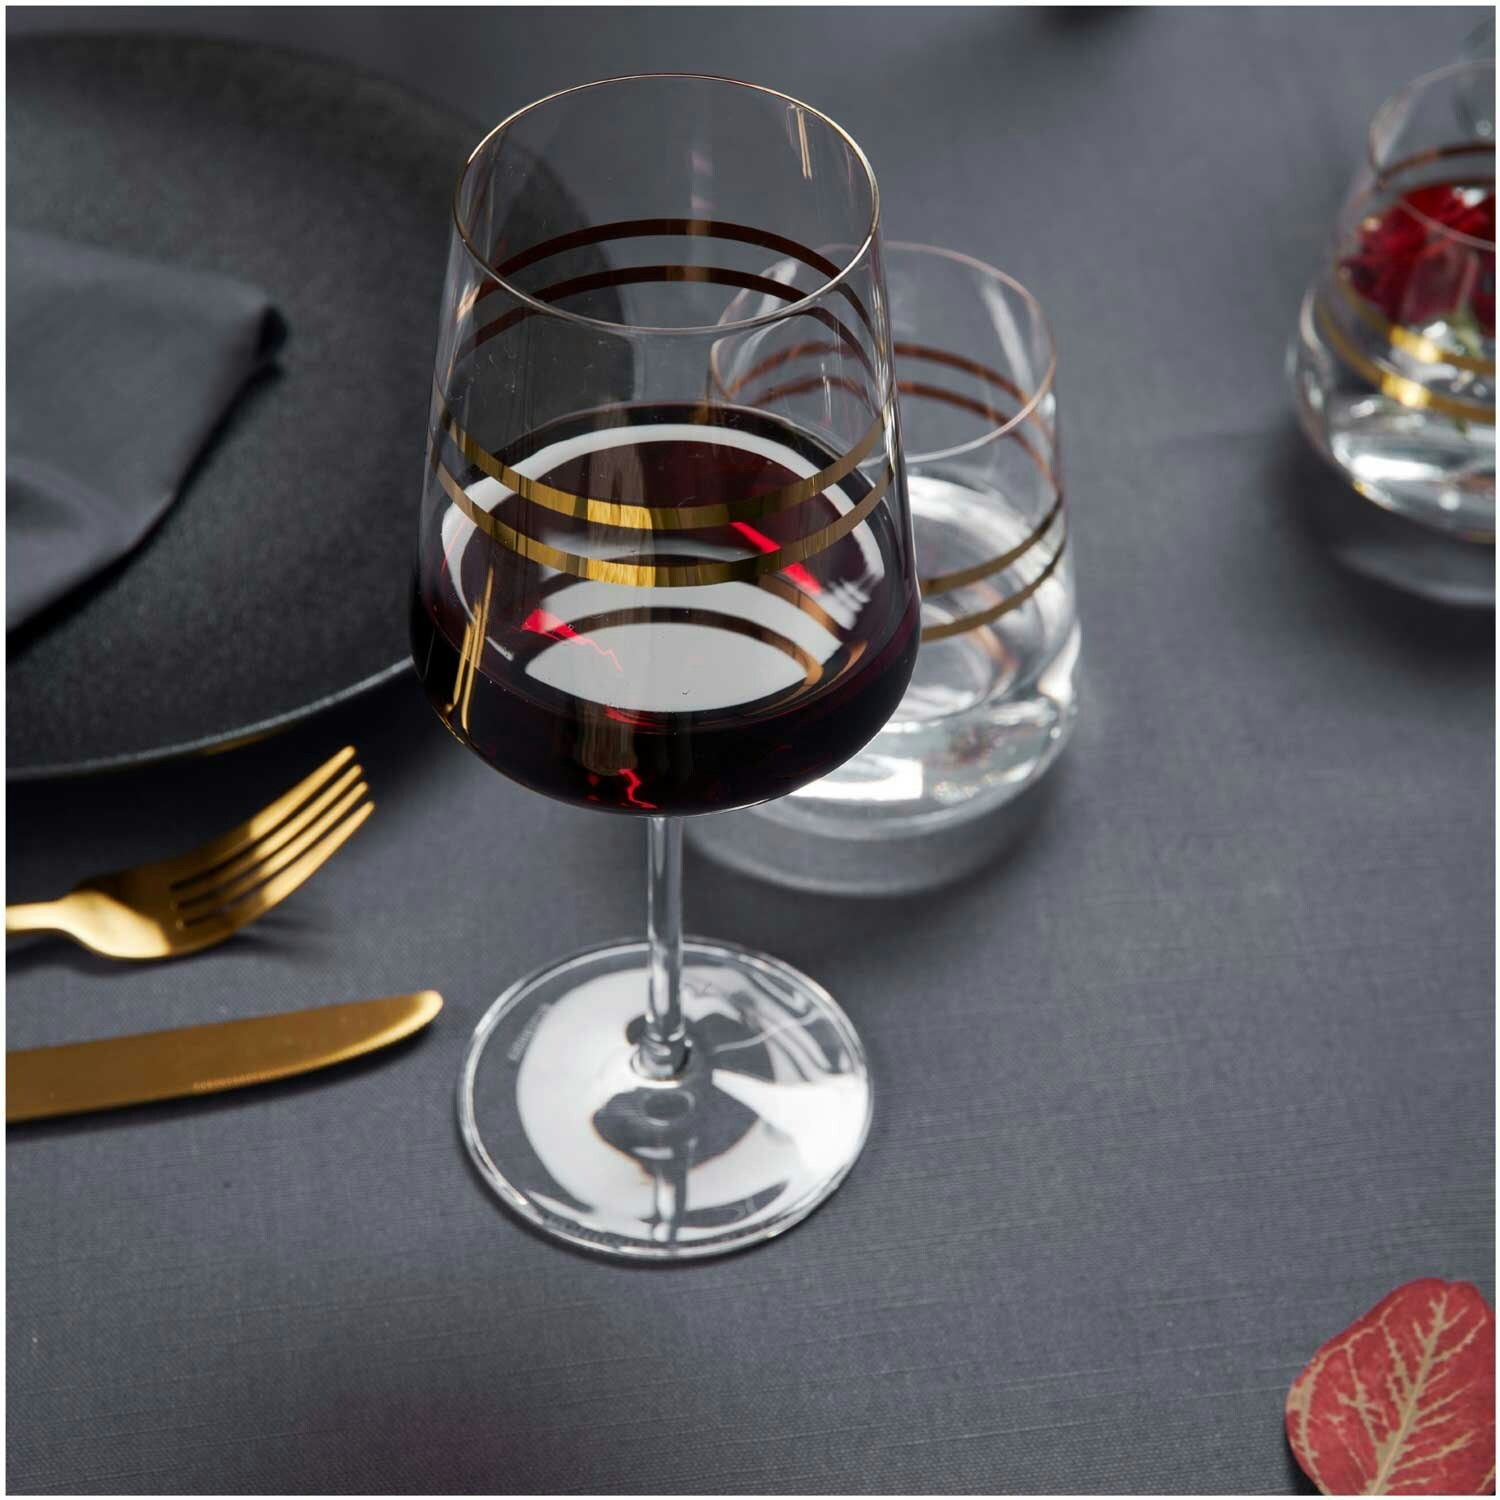 Celebration Deluxe Red Wine Glass Stars 2-pack, 54 cl - Ritzenhoff